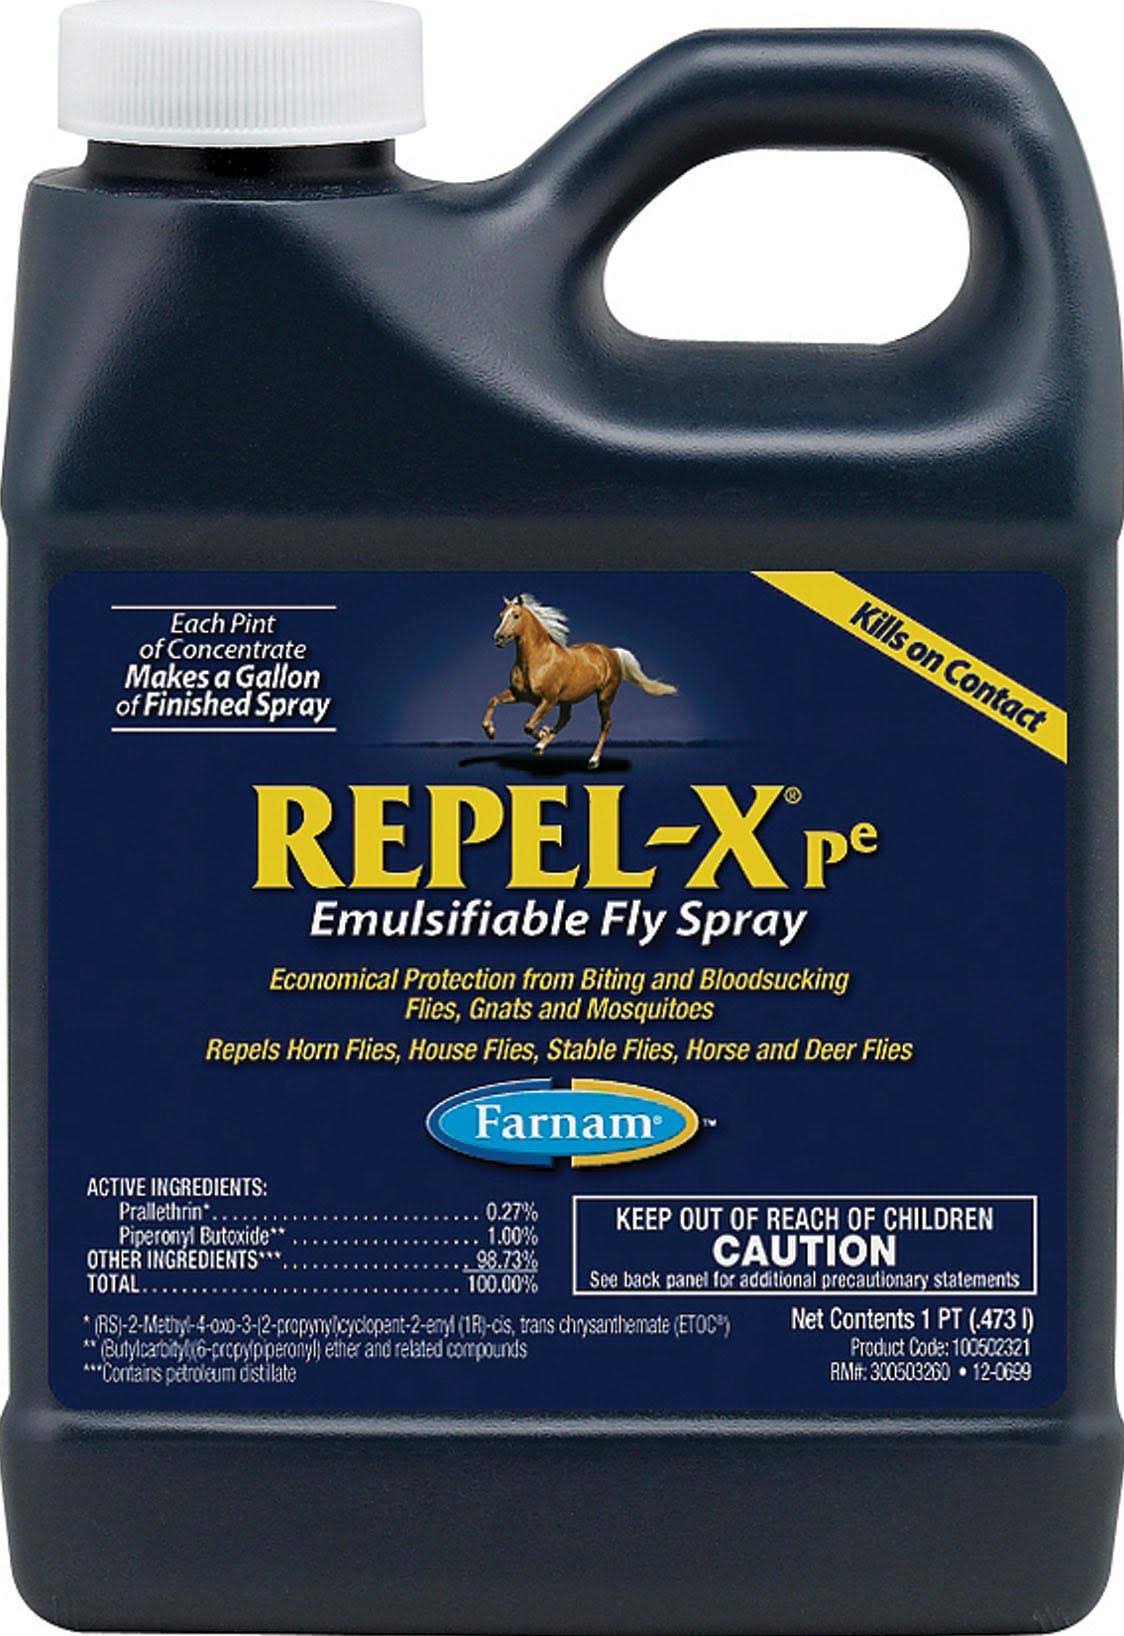 Farnam Repel Xpe Fly Spray - 16oz